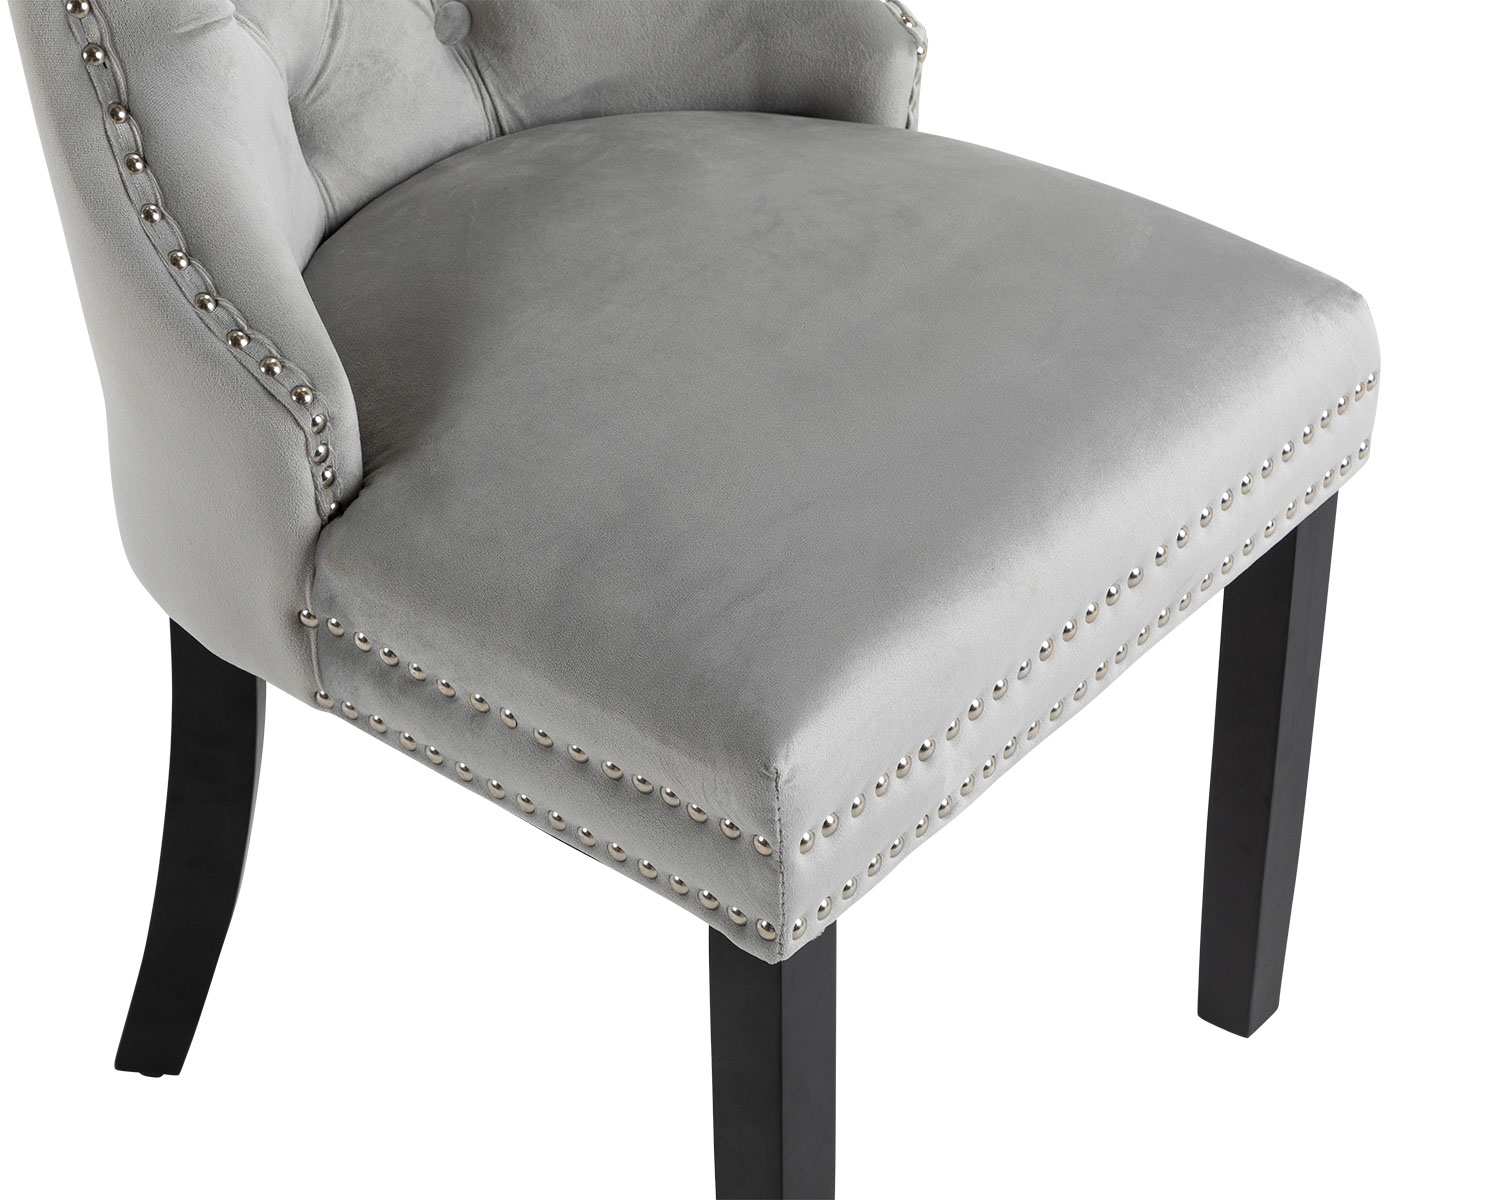 Square Knocker Chair / Ashford Dining Chair in Light Grey Velvet with